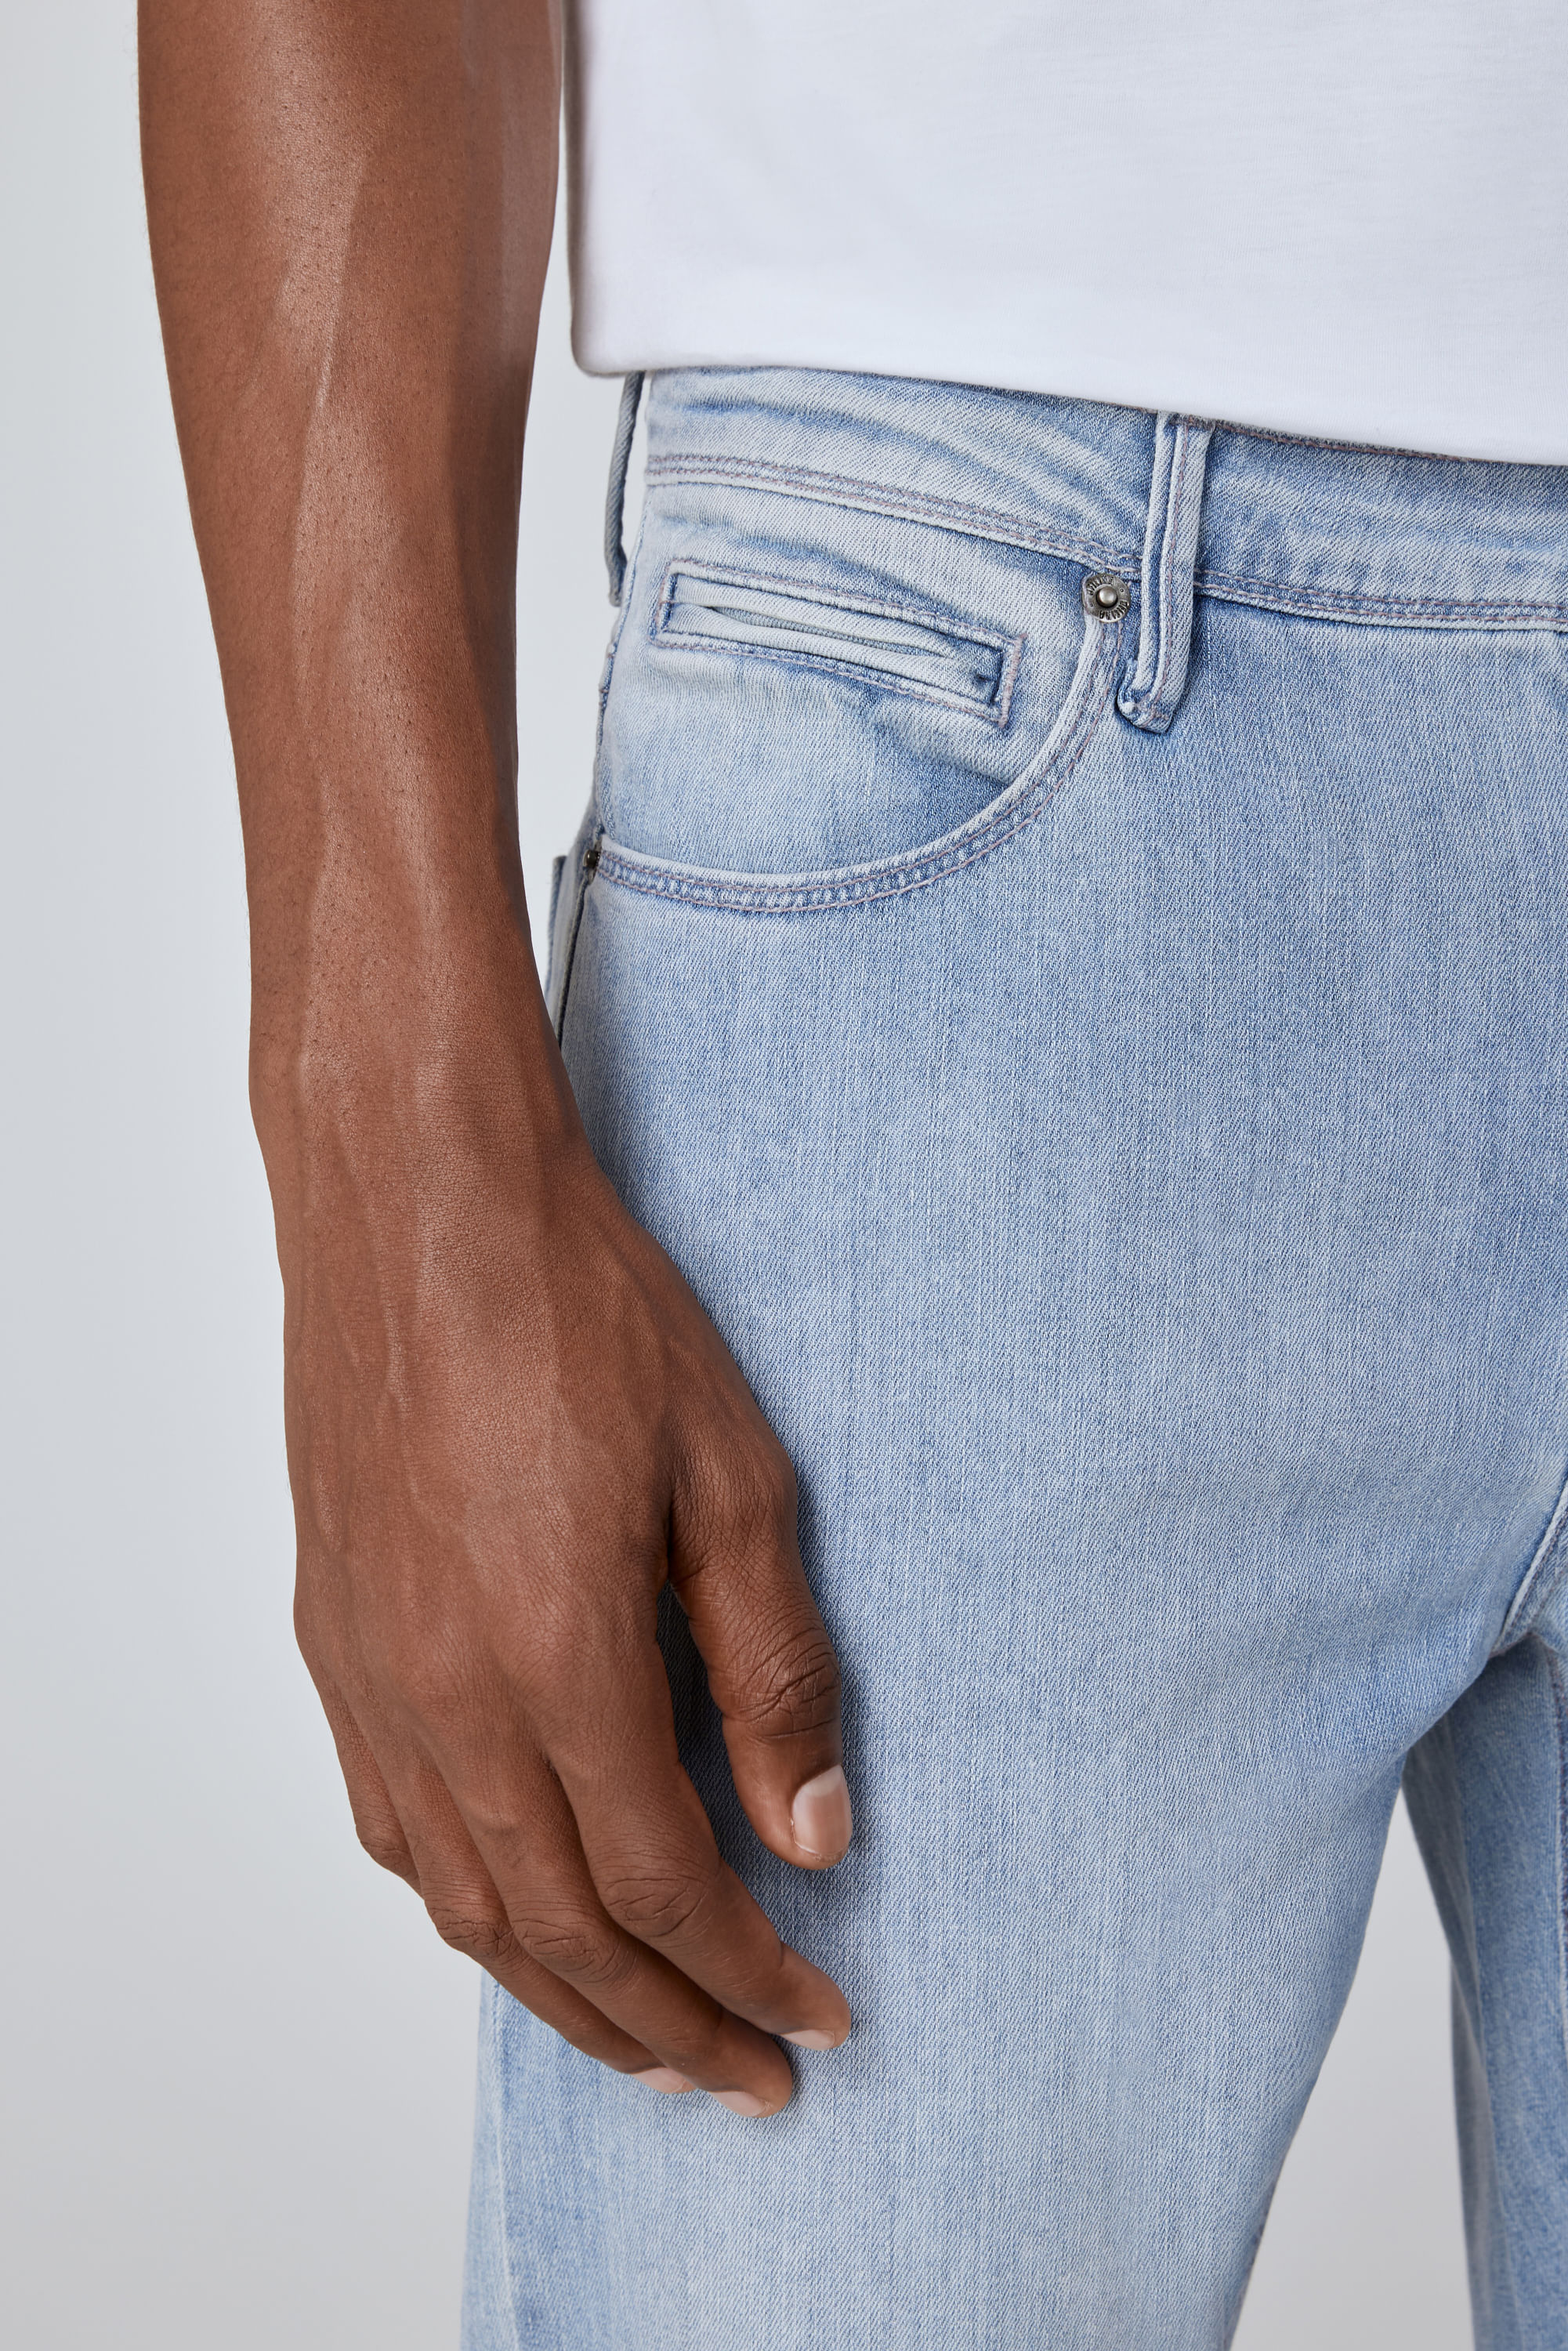 Calça Jeans 5 Pockets Azul Escura Masculina - Oficina Reserva